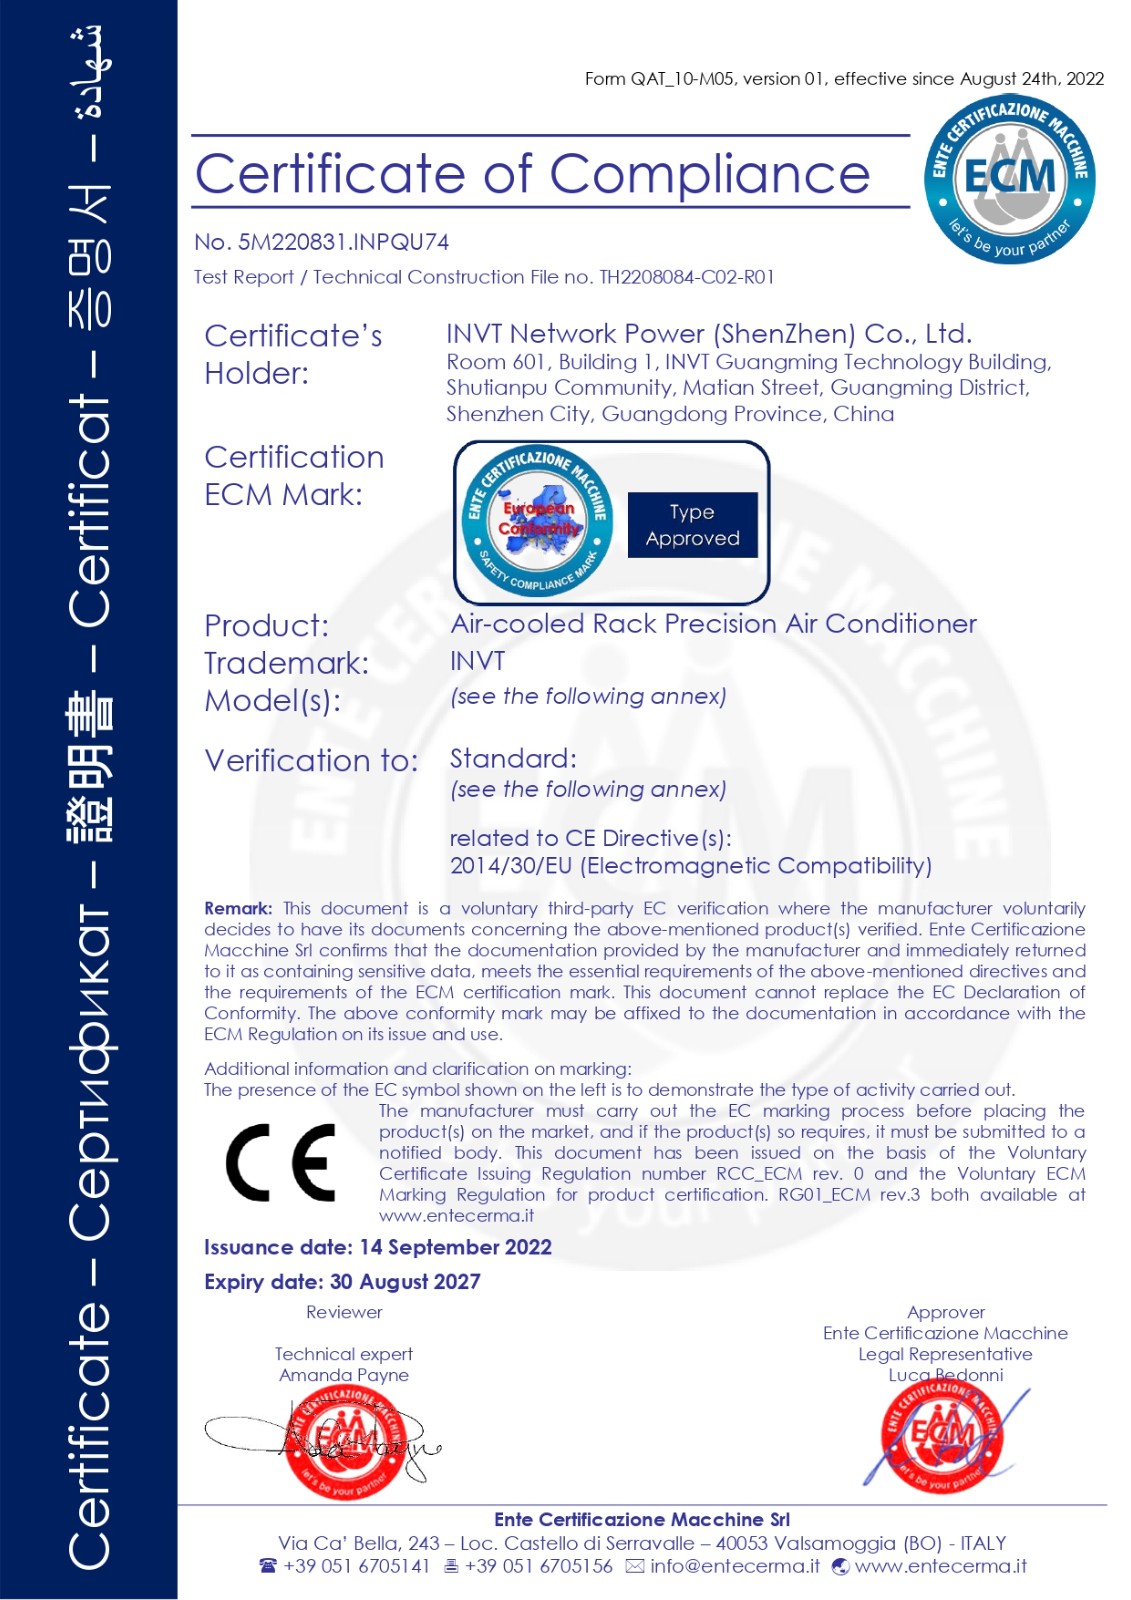 Rack air conditioner - EMC Certification 5M220831.INPQU74_page-0001.jpg